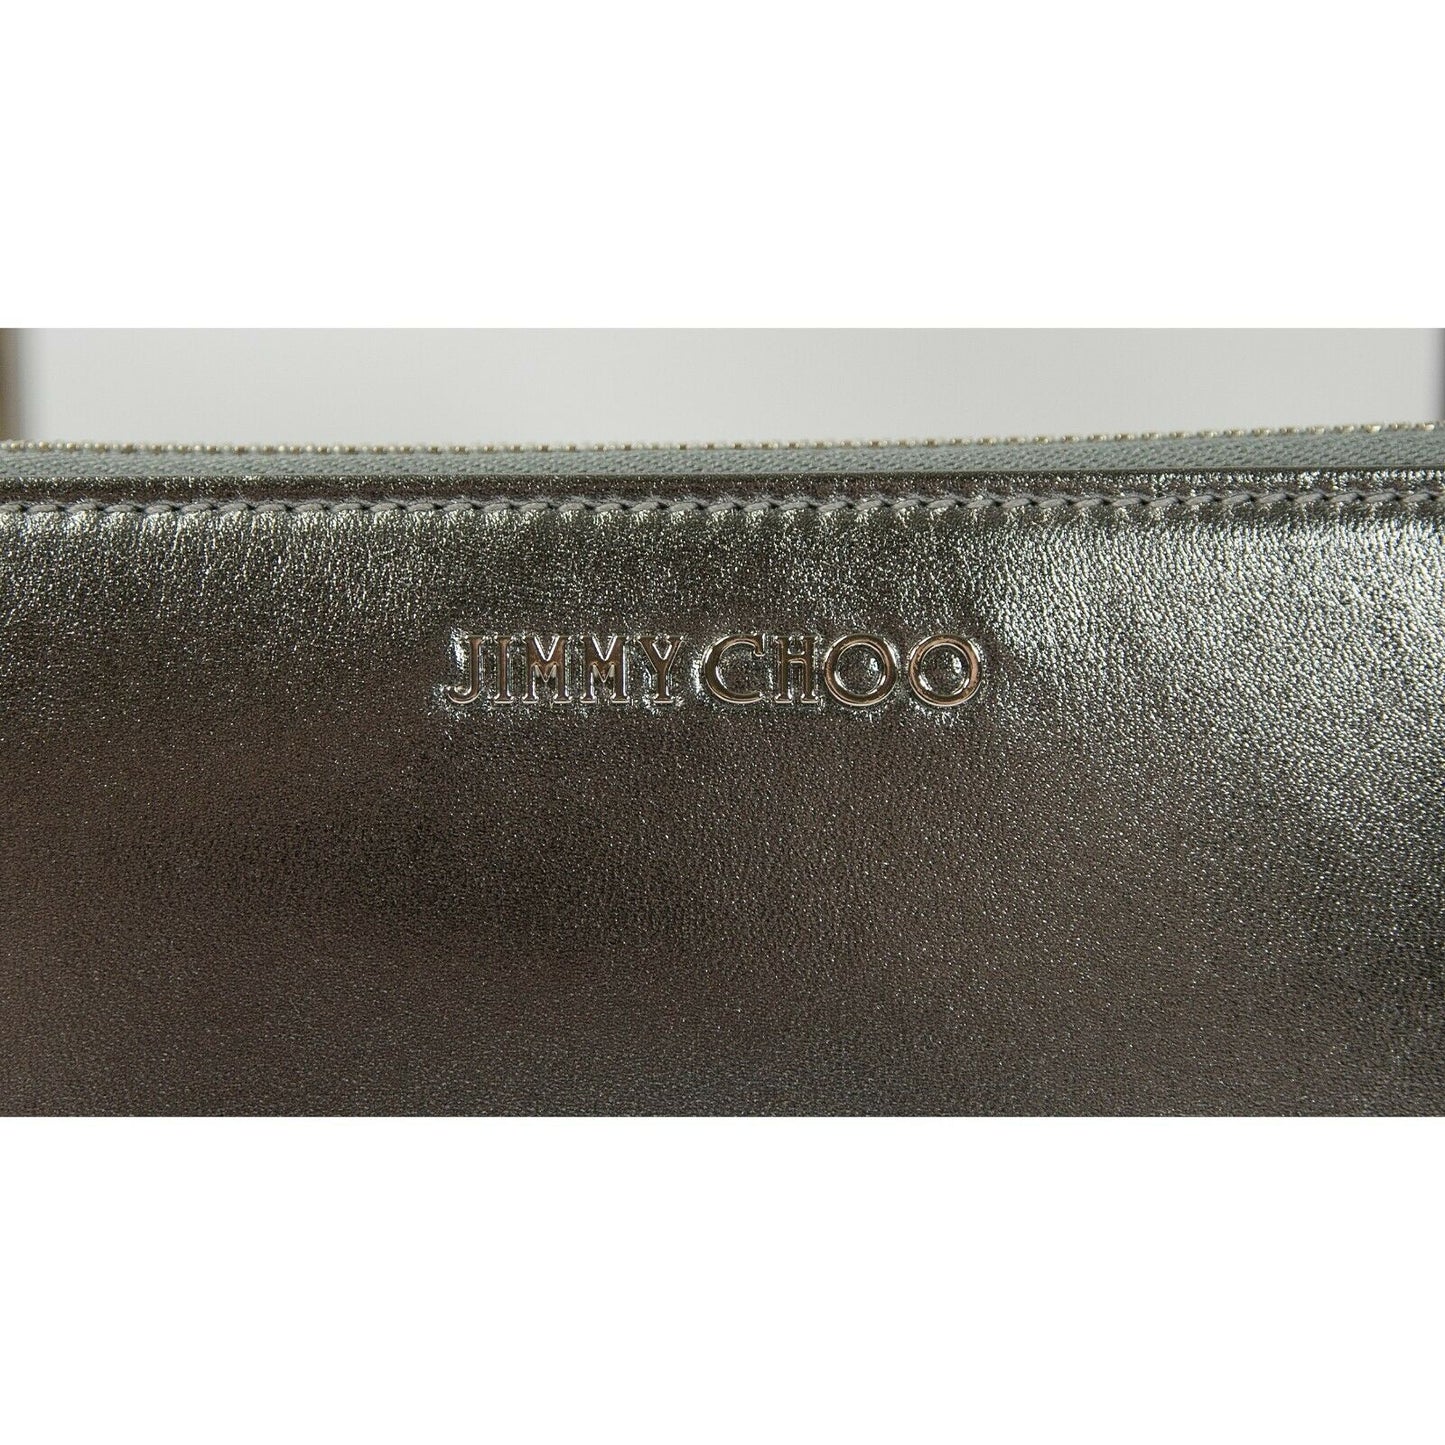 Jimmy Choo Gunmetal Metallic Leather Large Zip Around Continental Wallet NWT